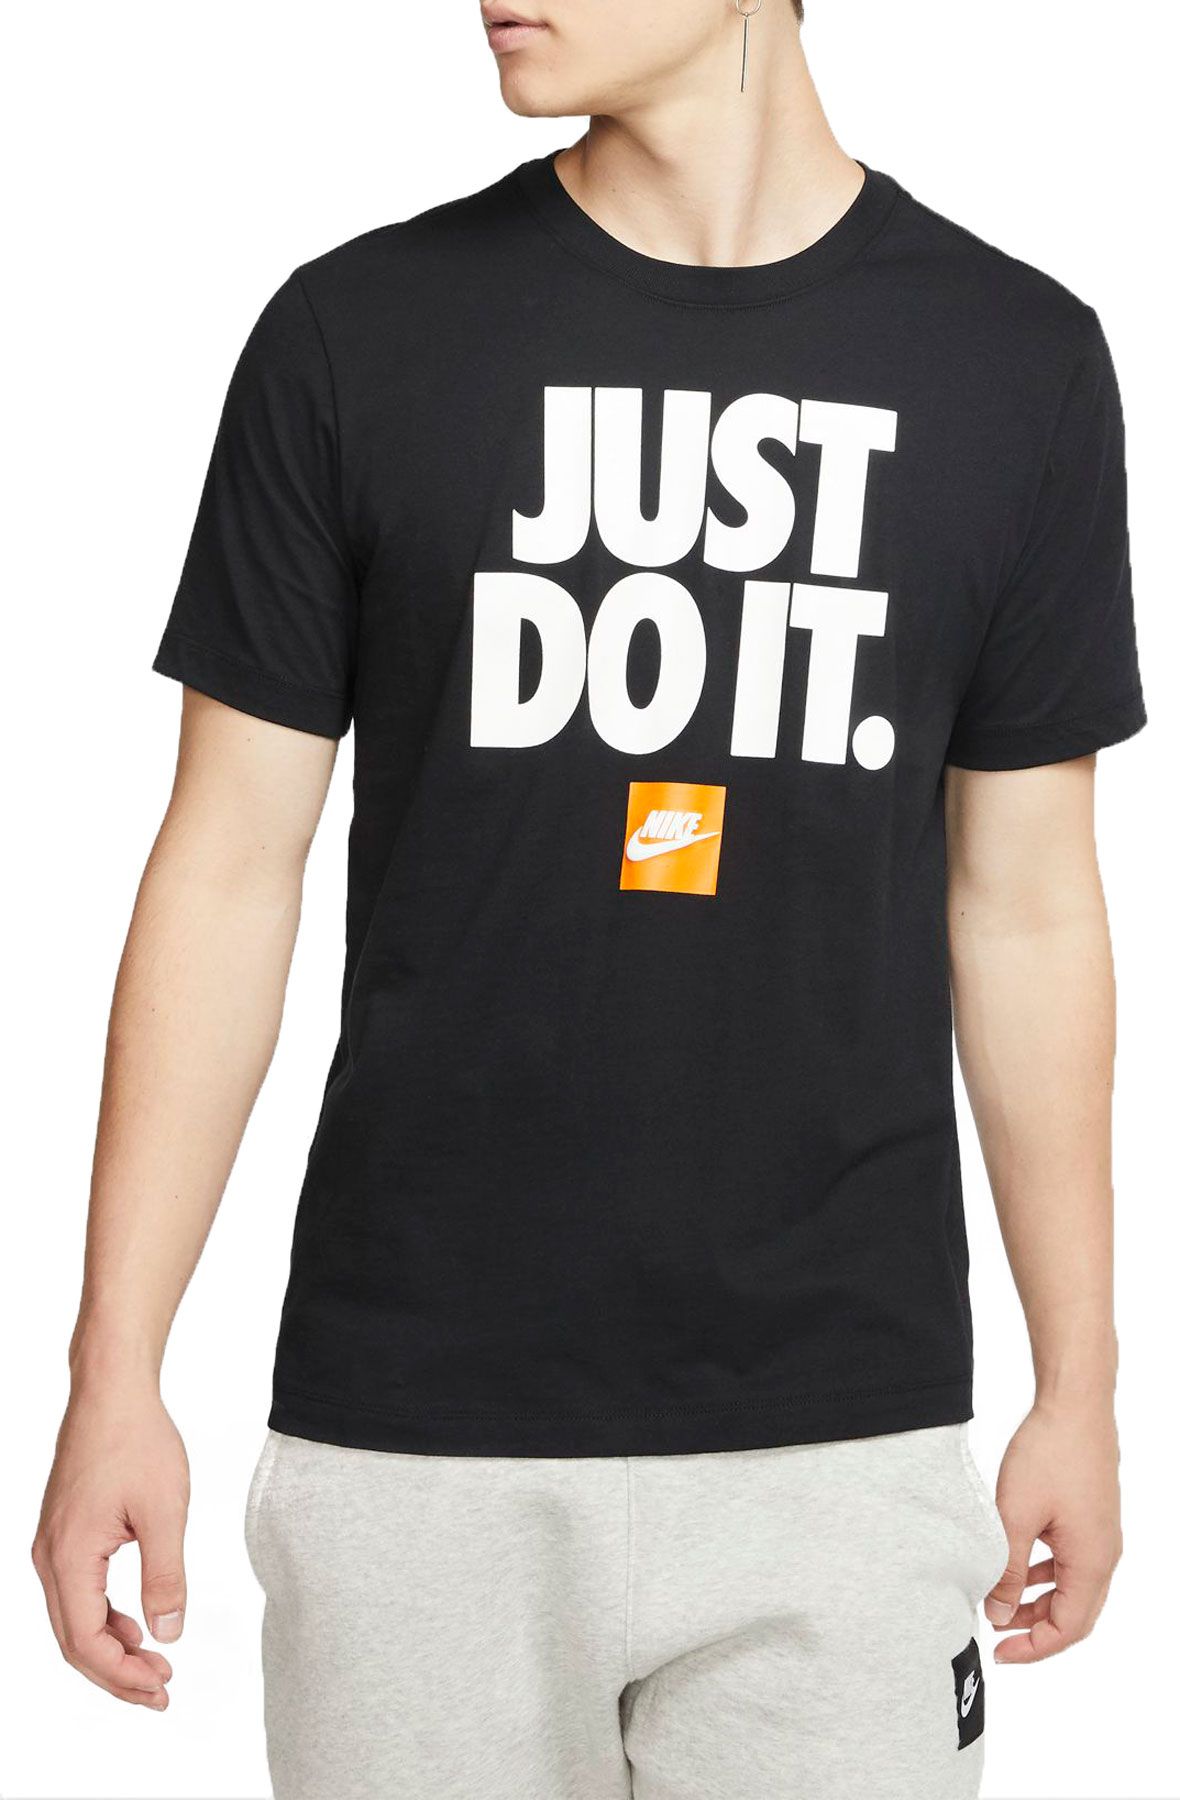 Nike Sportswear JDI Men's T-Shirt